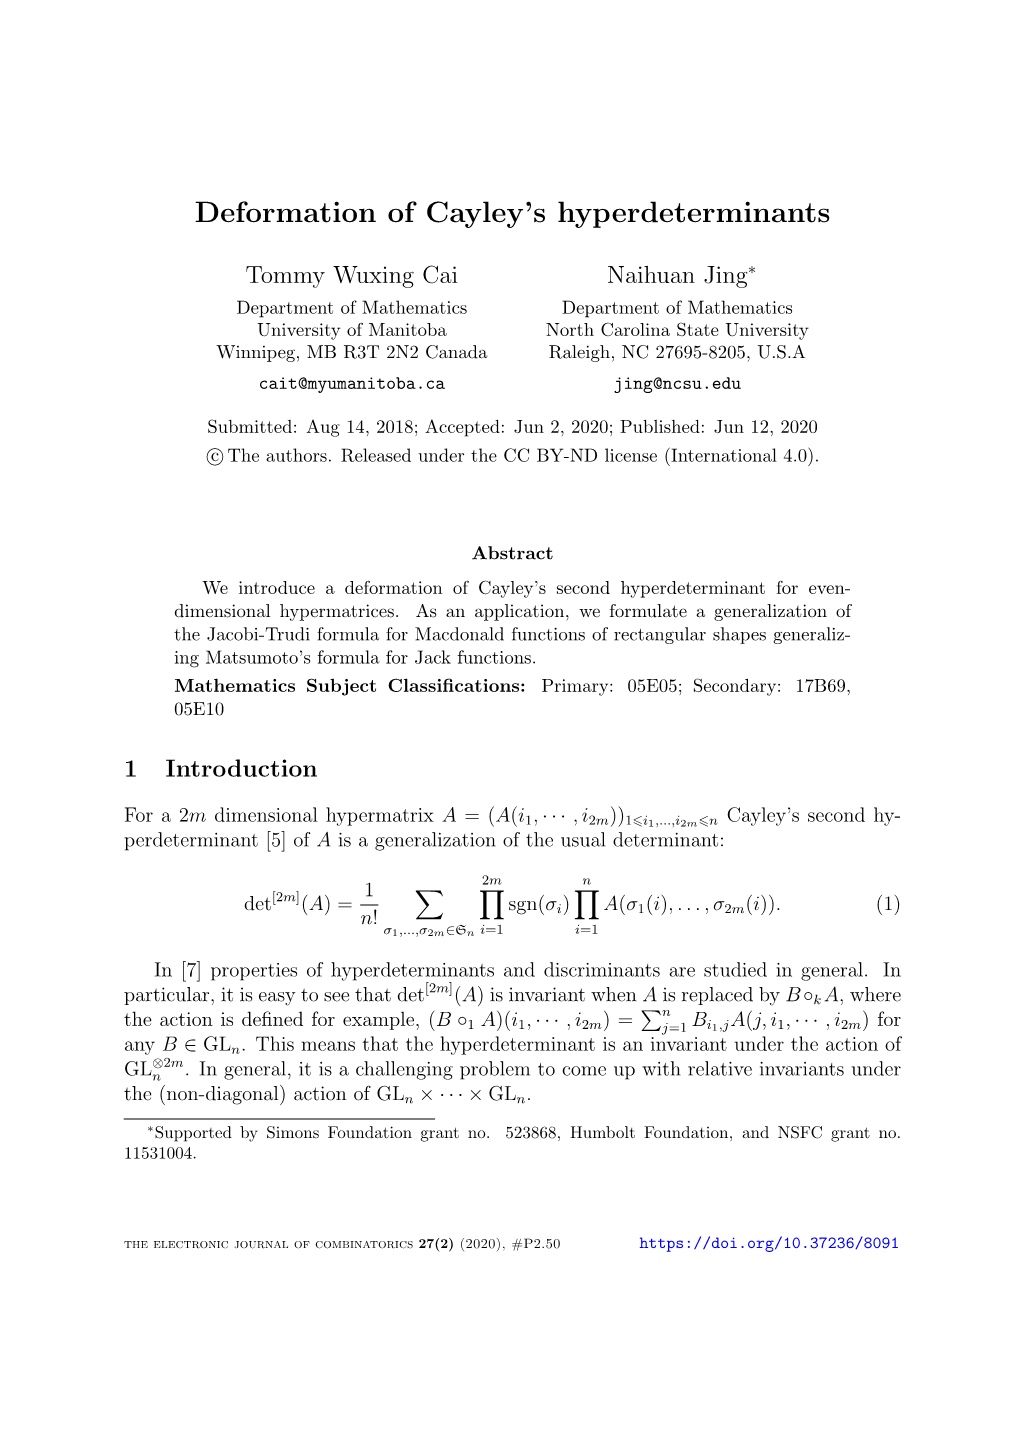 Deformation of Cayley's Hyperdeterminants